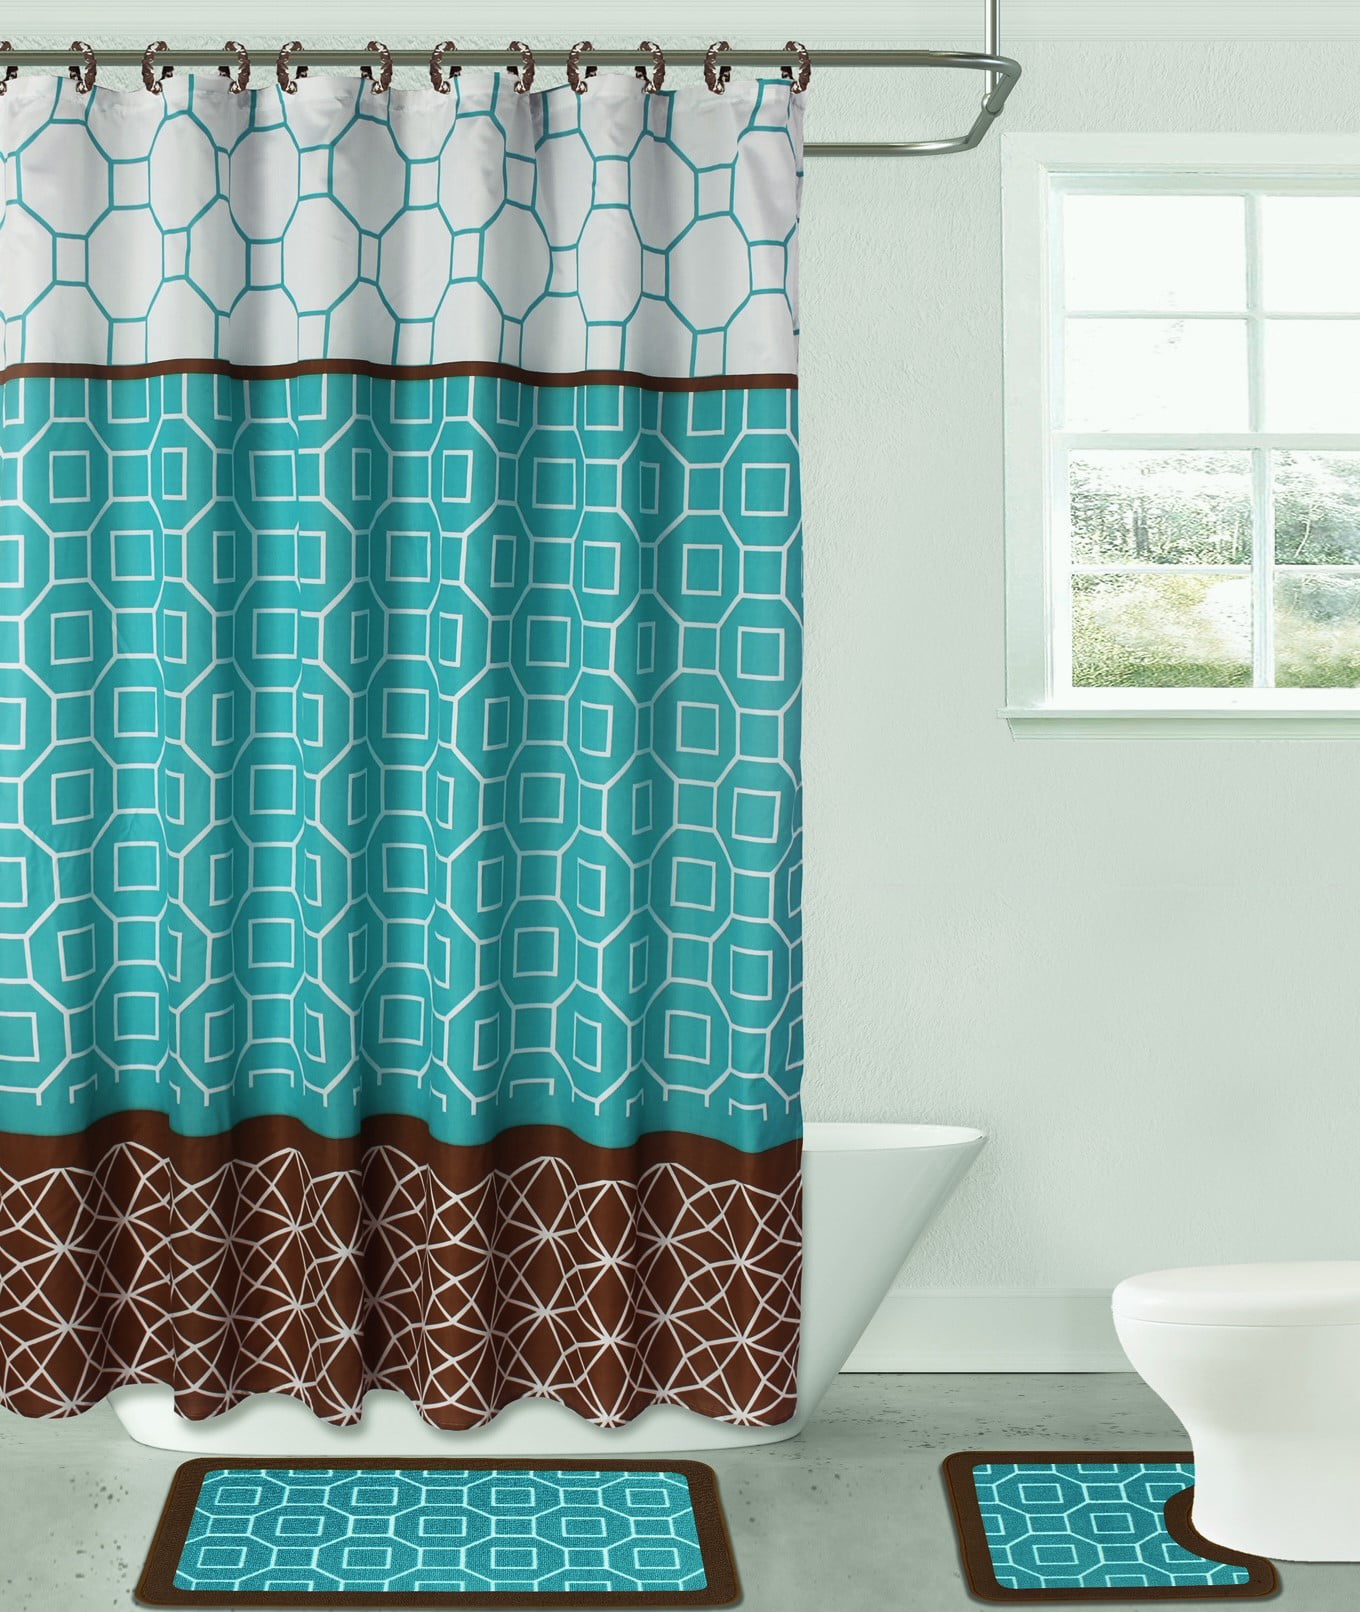 2 Non Slip Bath Mats Rugs Fabric Shower, Beverly Hills Hotel Shower Curtain